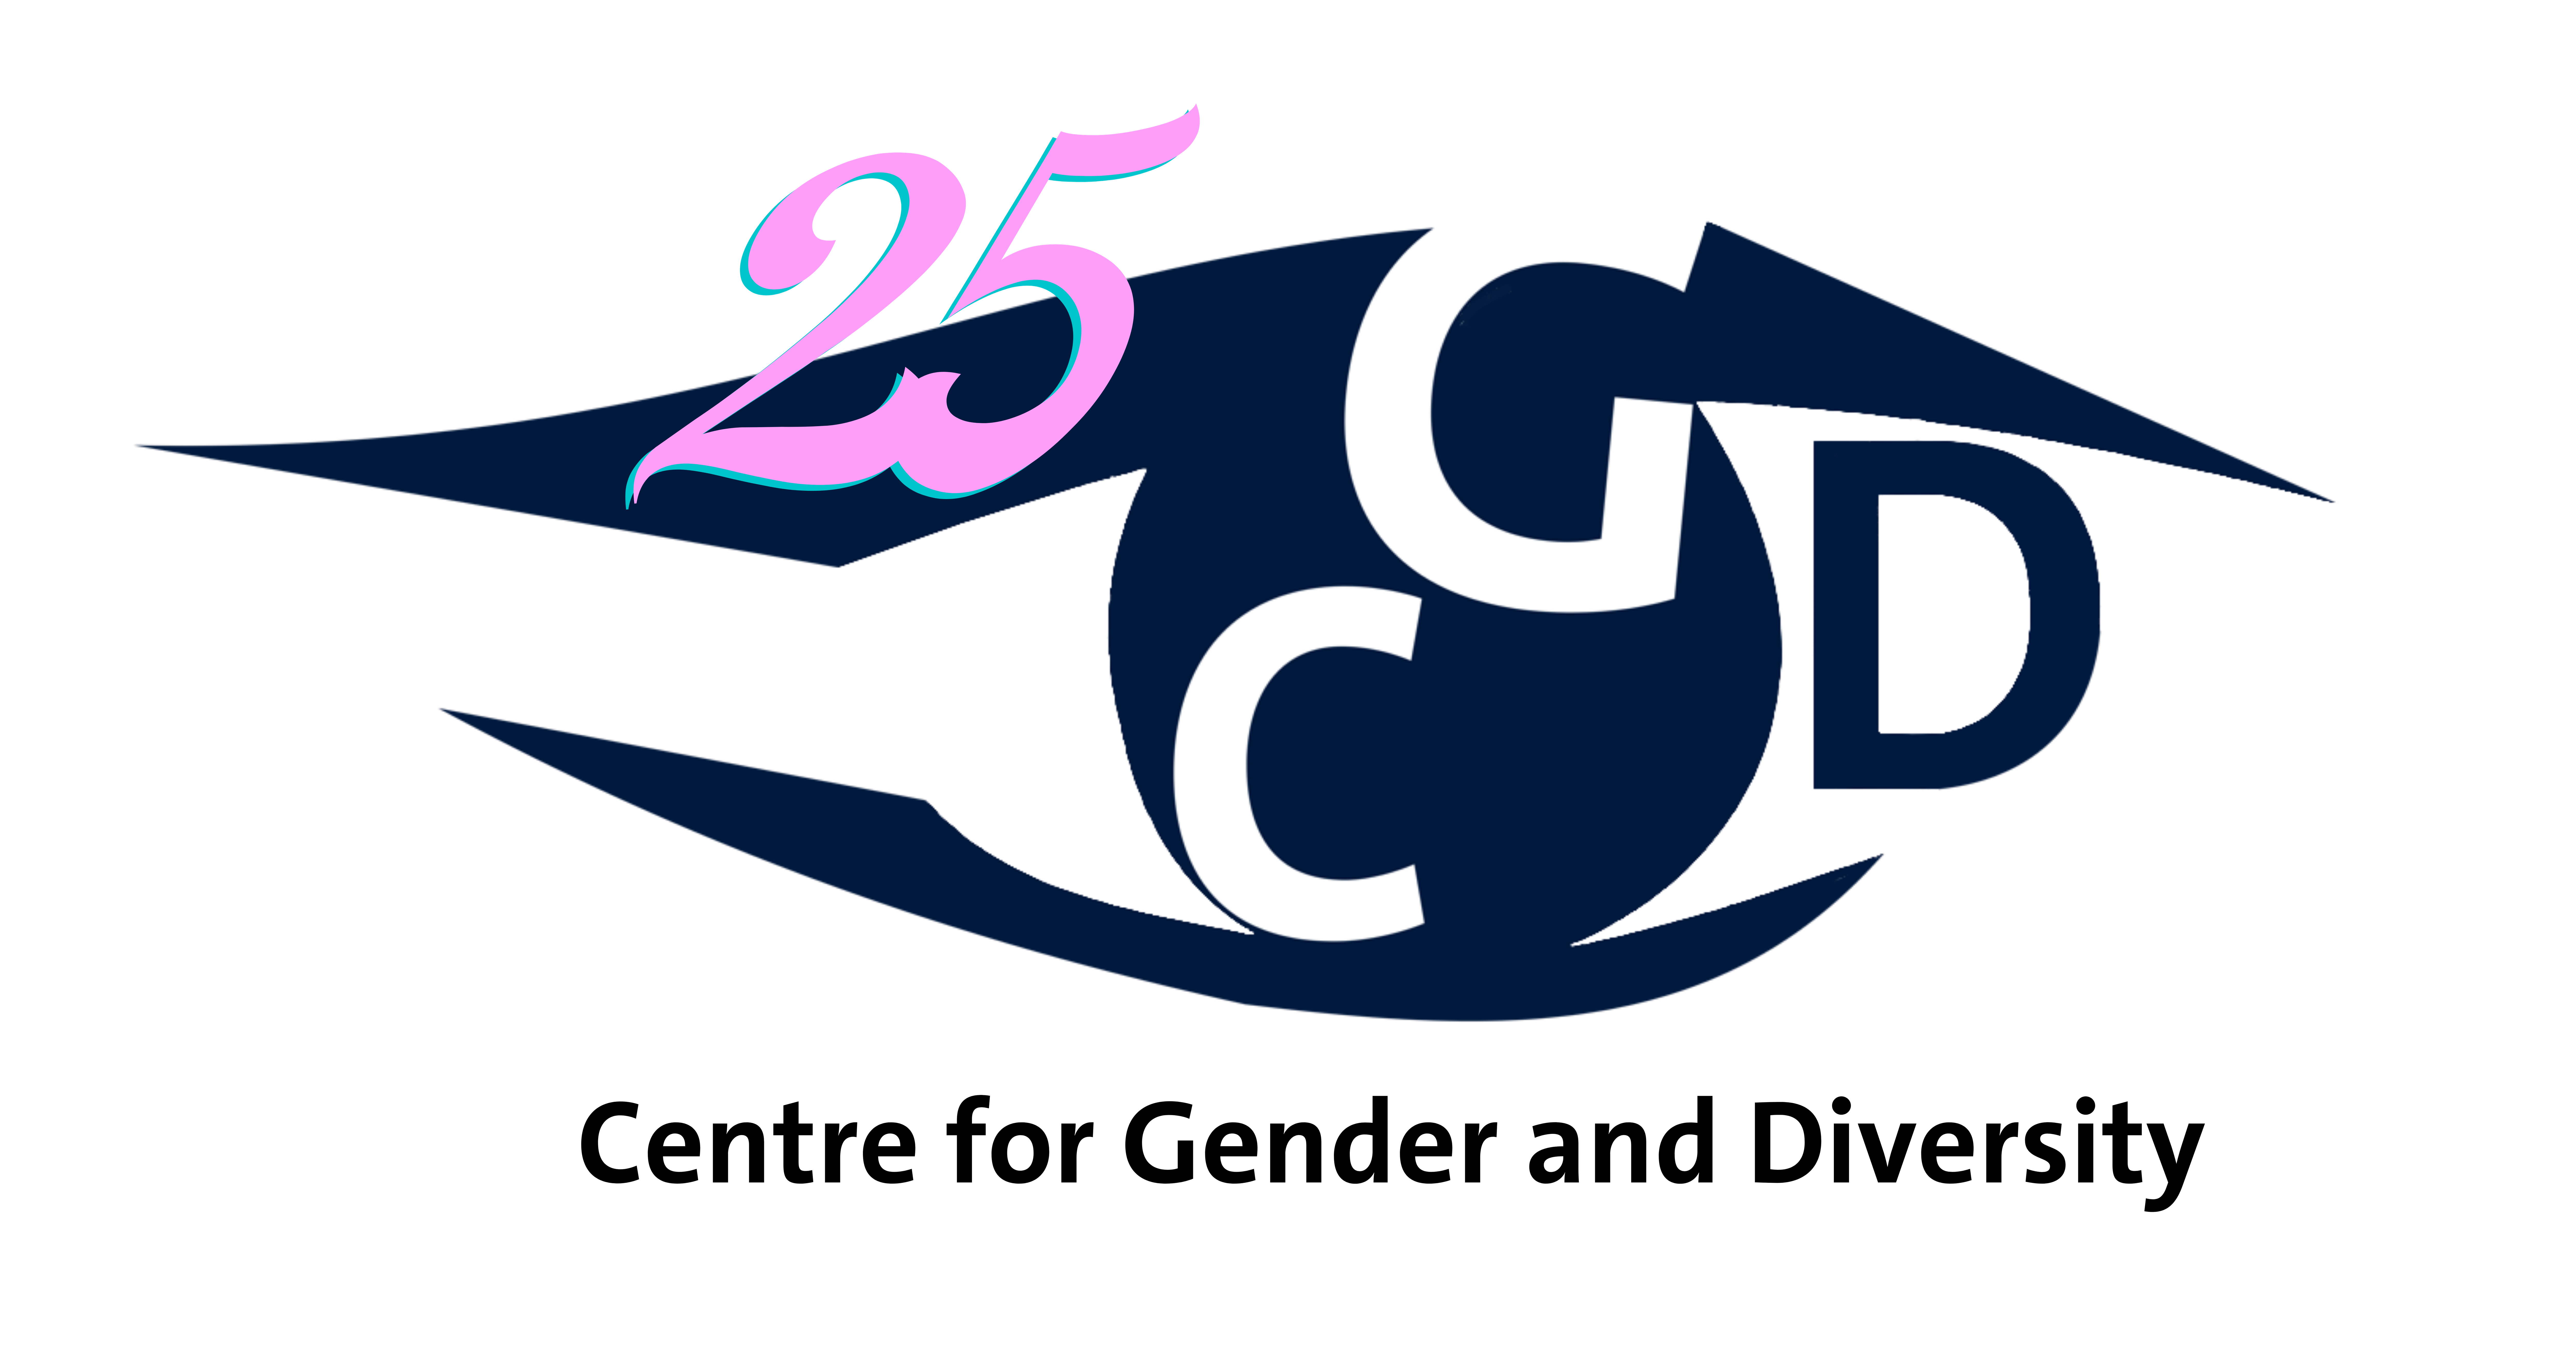 CGD eye logo